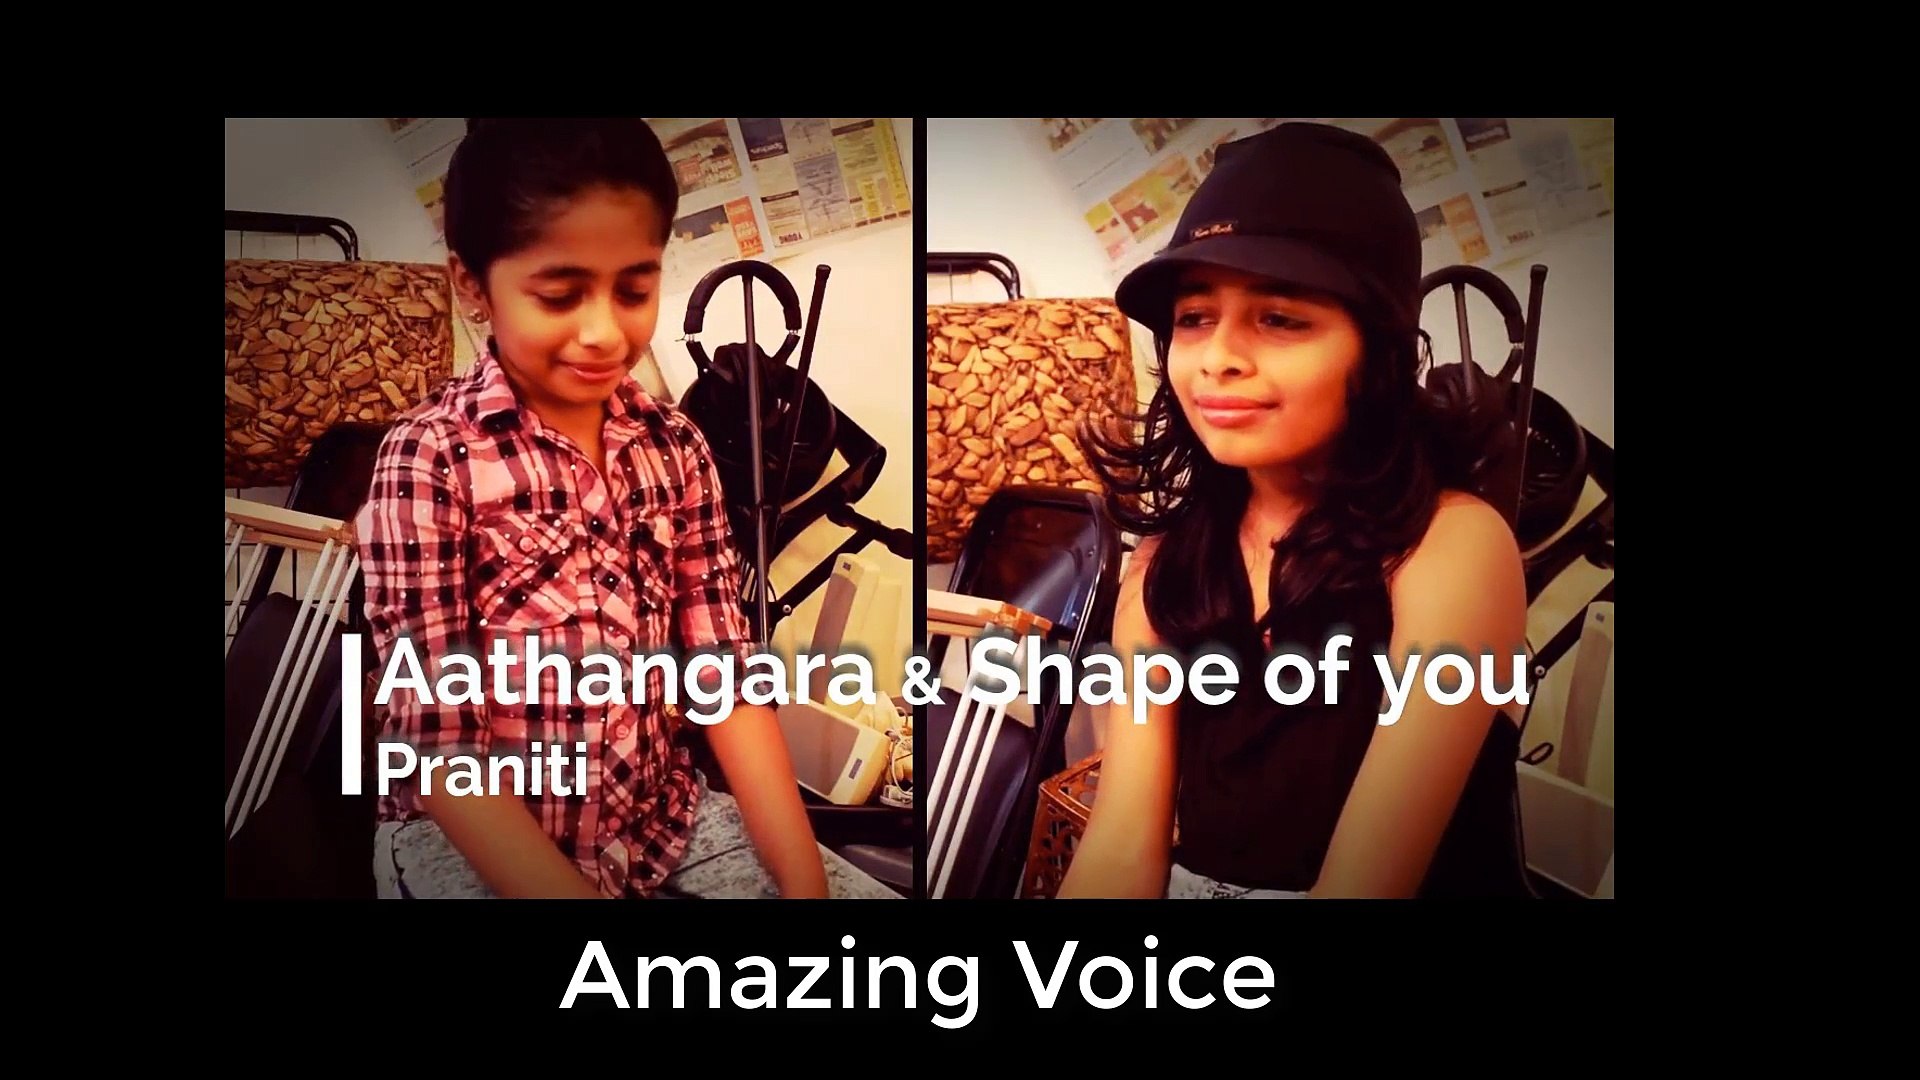 amazing voice girl singing ed sheeran shape of you and aathangaara orathil mashup